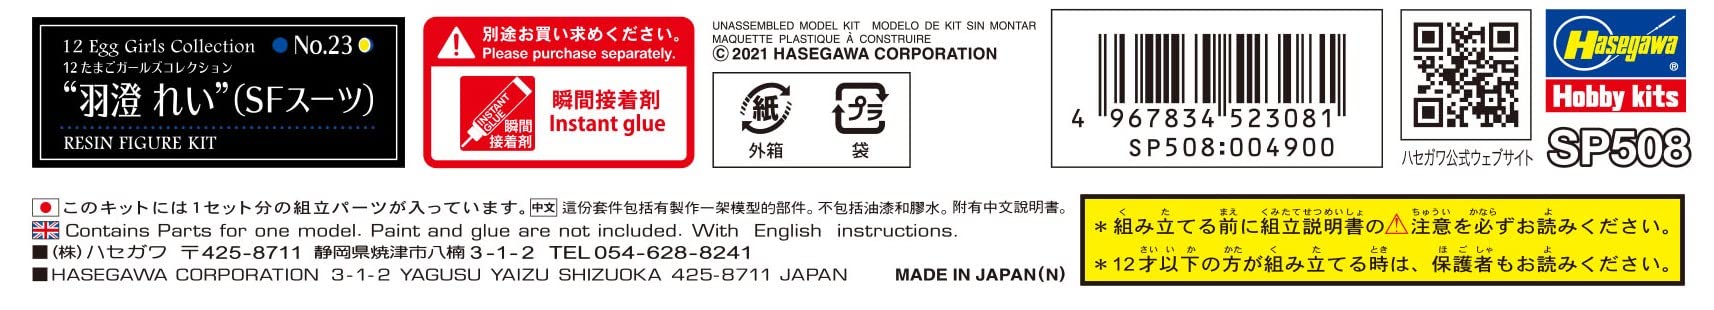 Hasegawa 1/12 Egg Girls Collection No.23 Rei Hazumi (SF SUIT) Resin Kit SP508_8